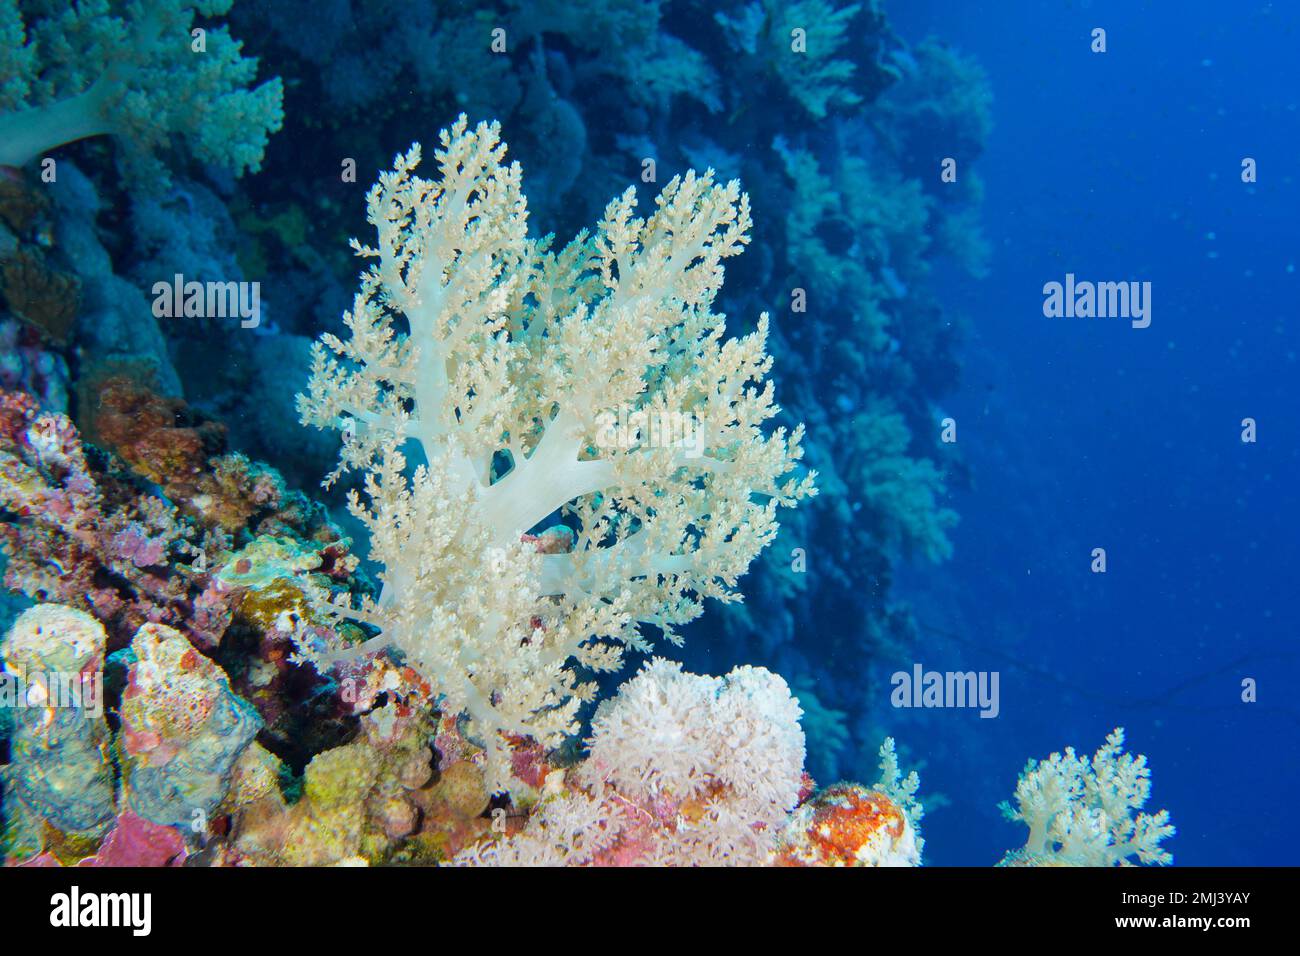 Broccoli tree (Litophyton arboreum), Daedalus Reef dive site, Egypt, Red Sea Stock Photo